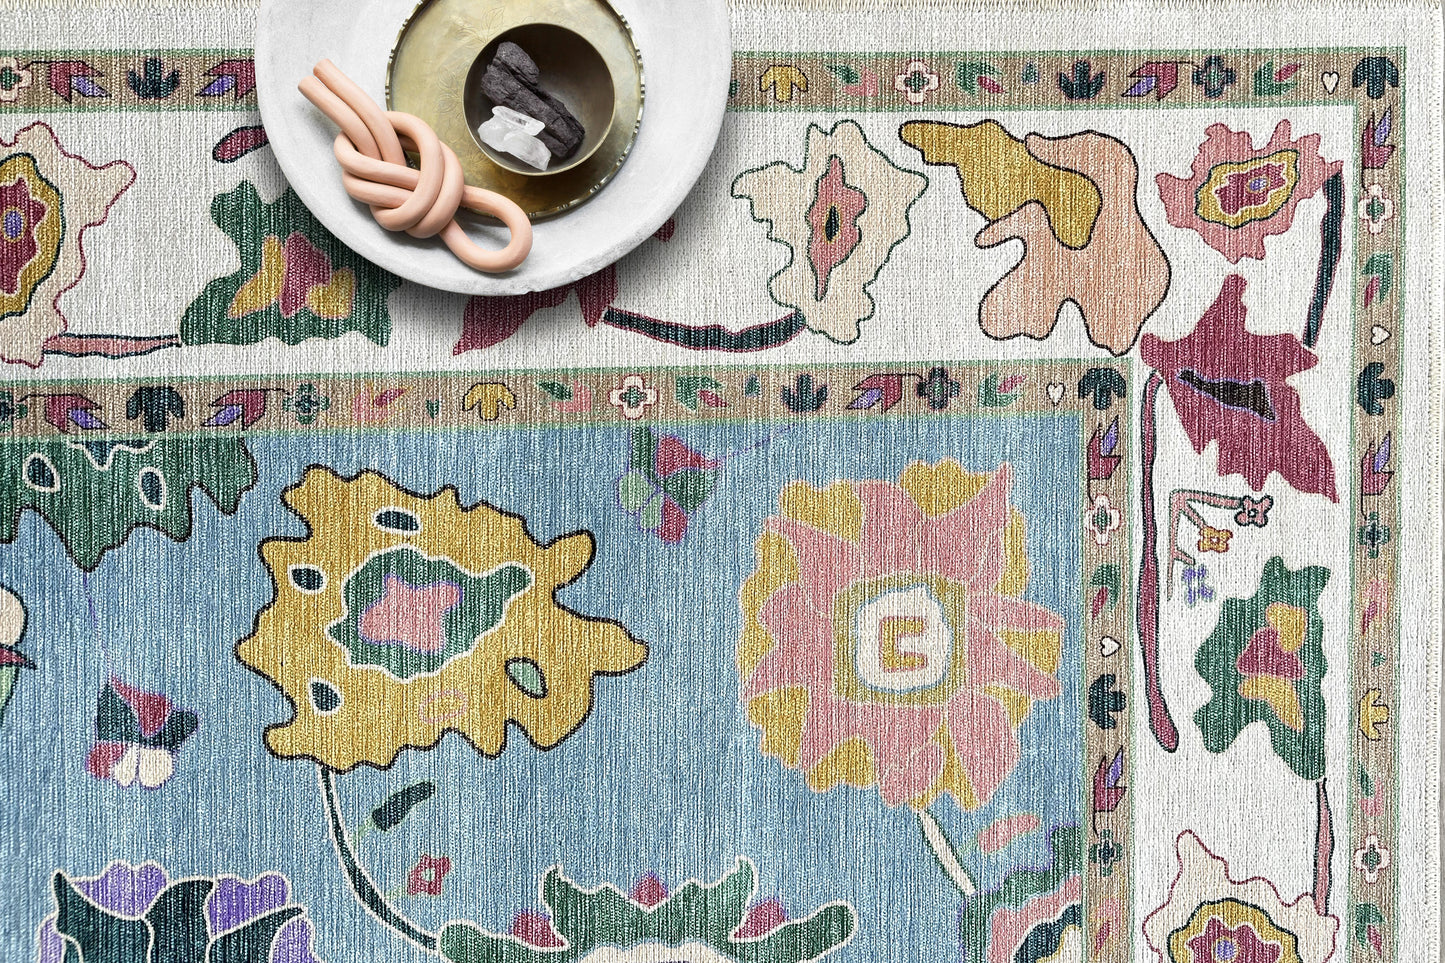 Oushak Rug, Colorful Vintage Turkish Eclectic Floral Pastel Large Oversized Area Rugs for Living room Bedroom Kitchen Bathroom Kids